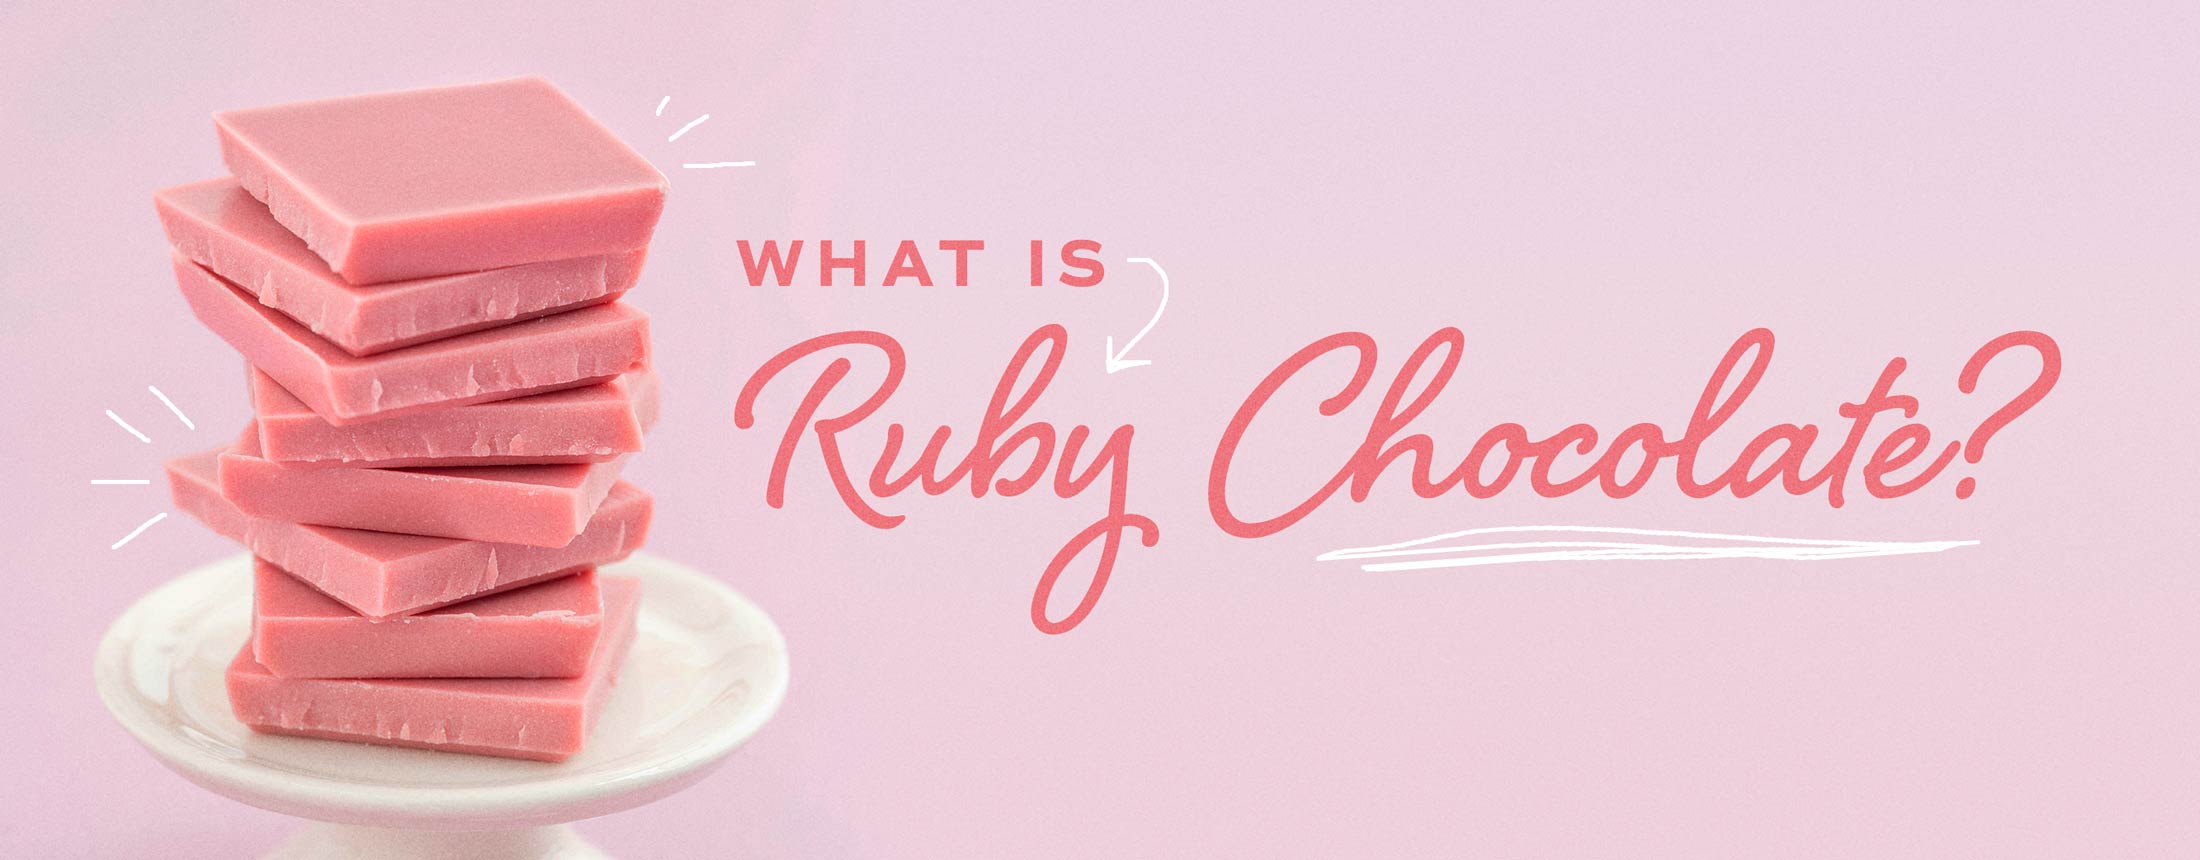 New '4th Type' of Chocolate - Ruby Chocolate Tastes Like